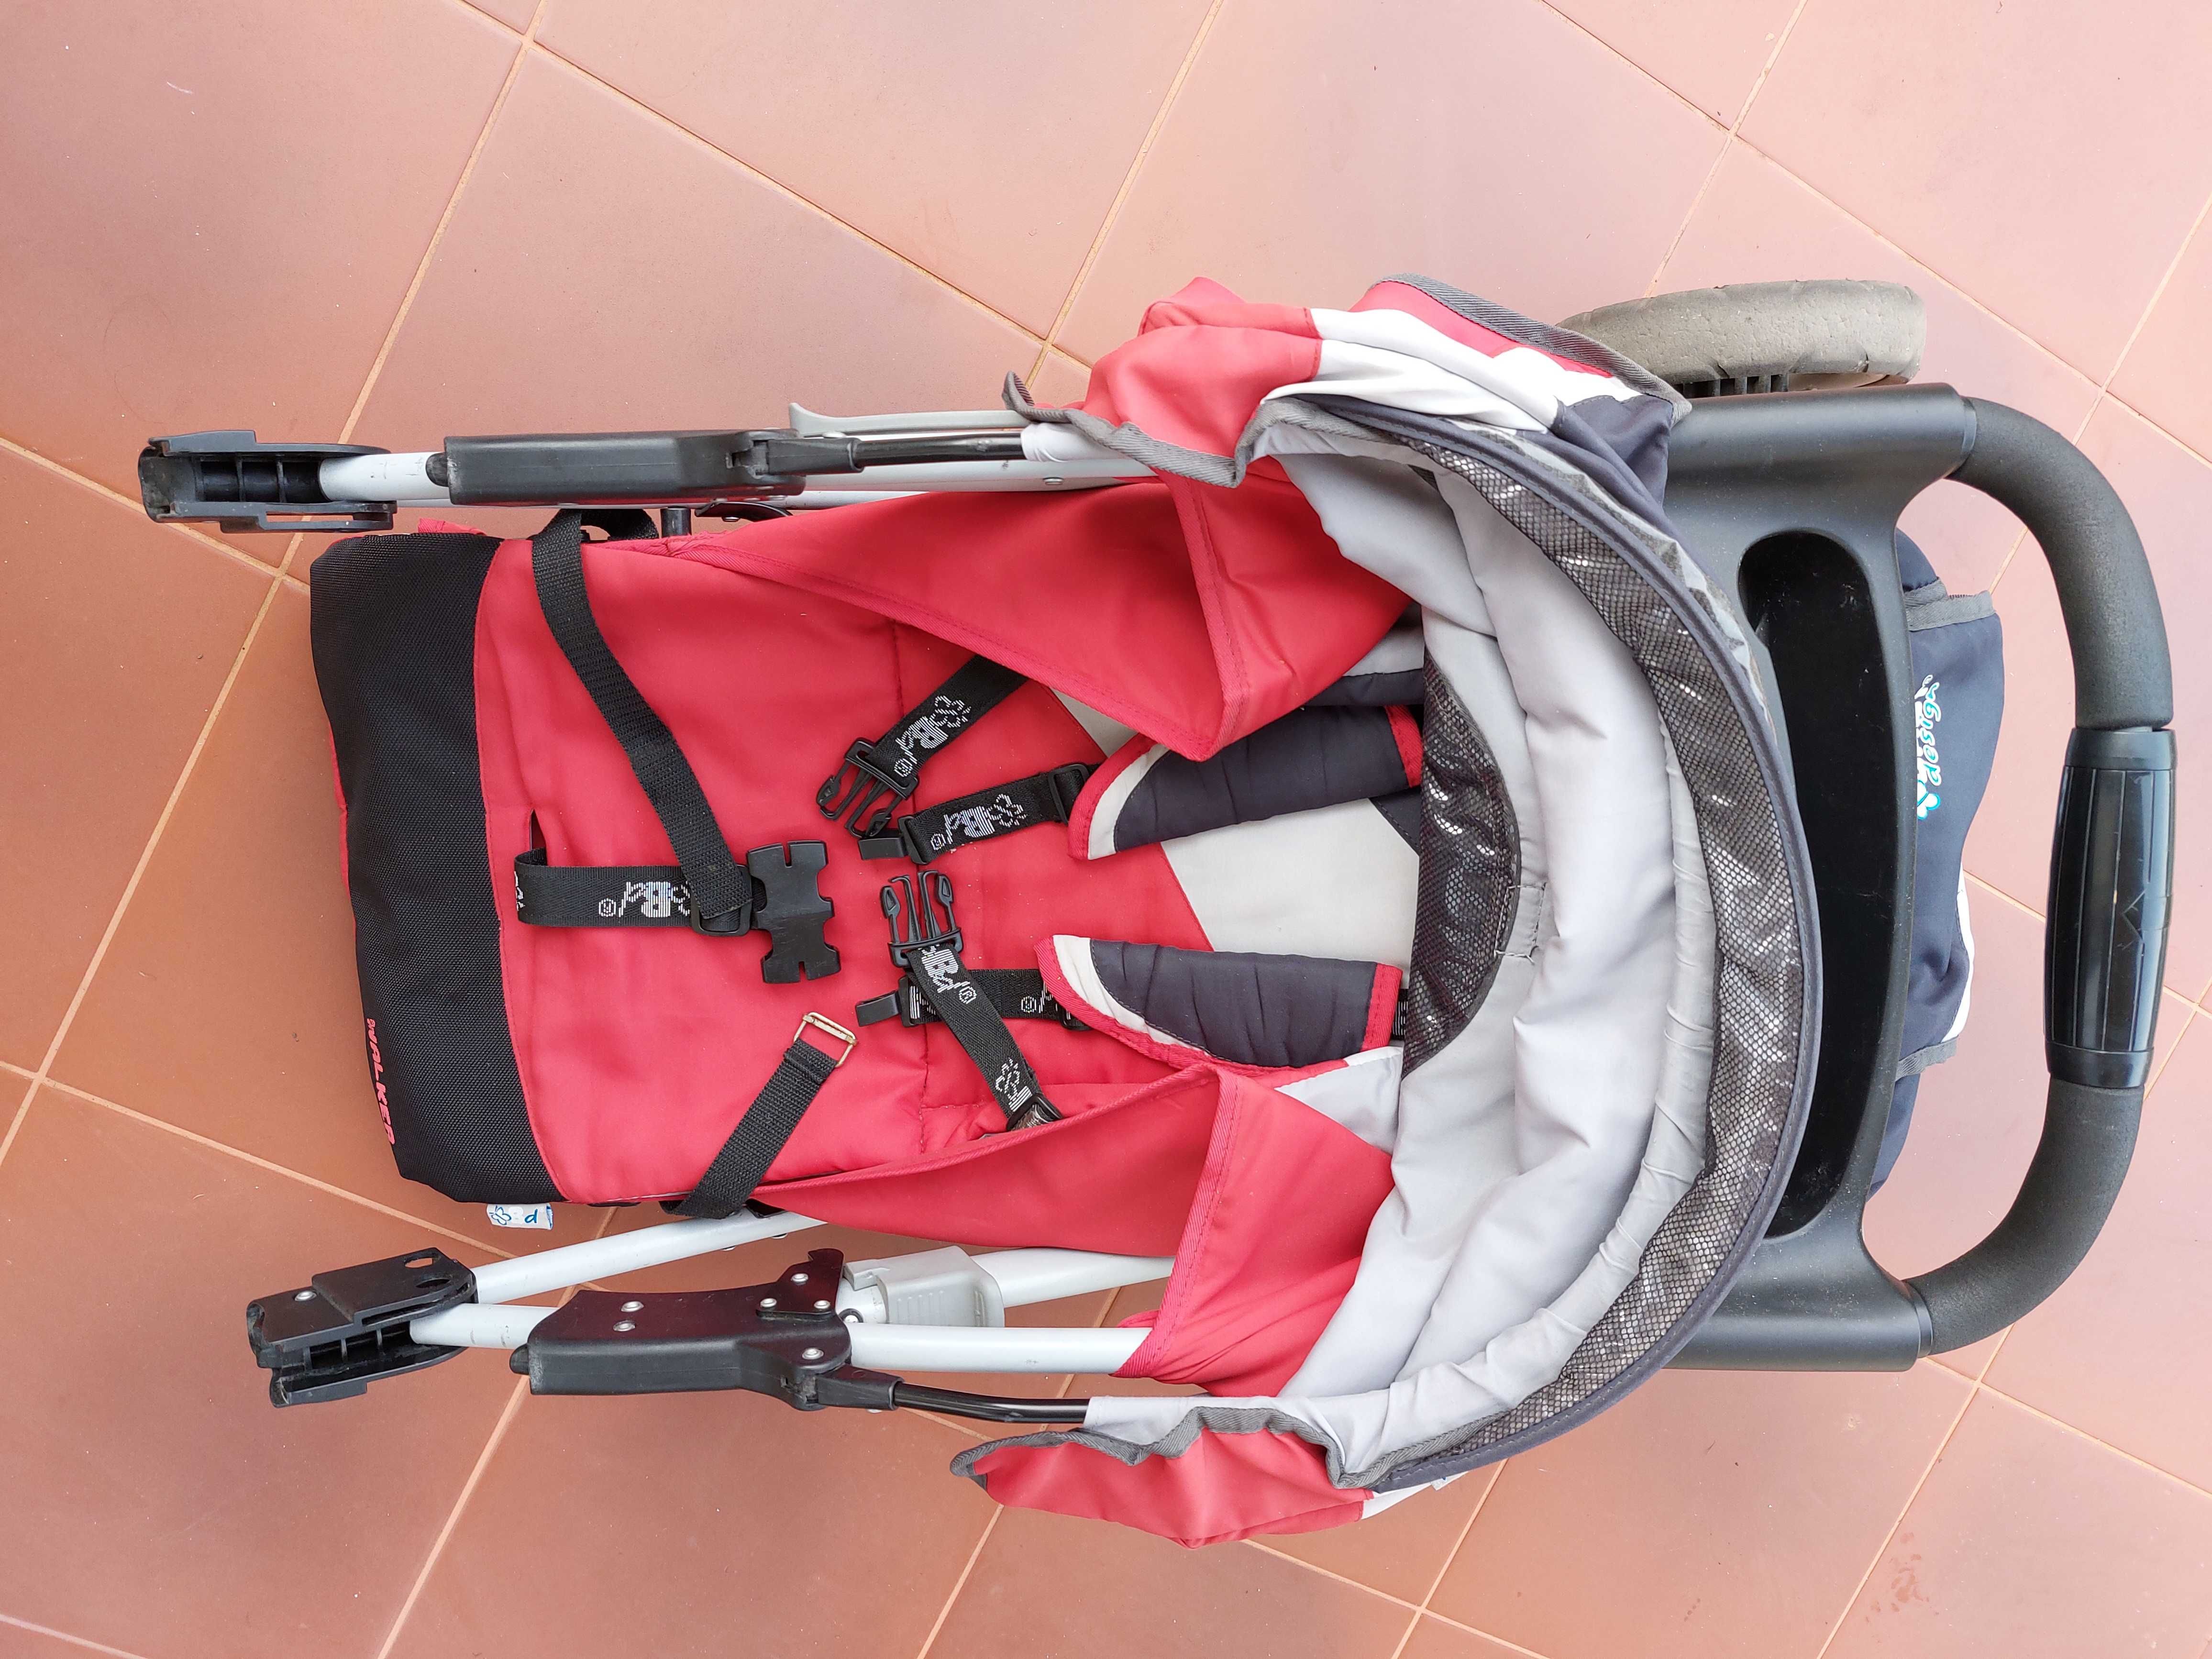 Wózek Baby Design Walker + parasolka + ochraniacz